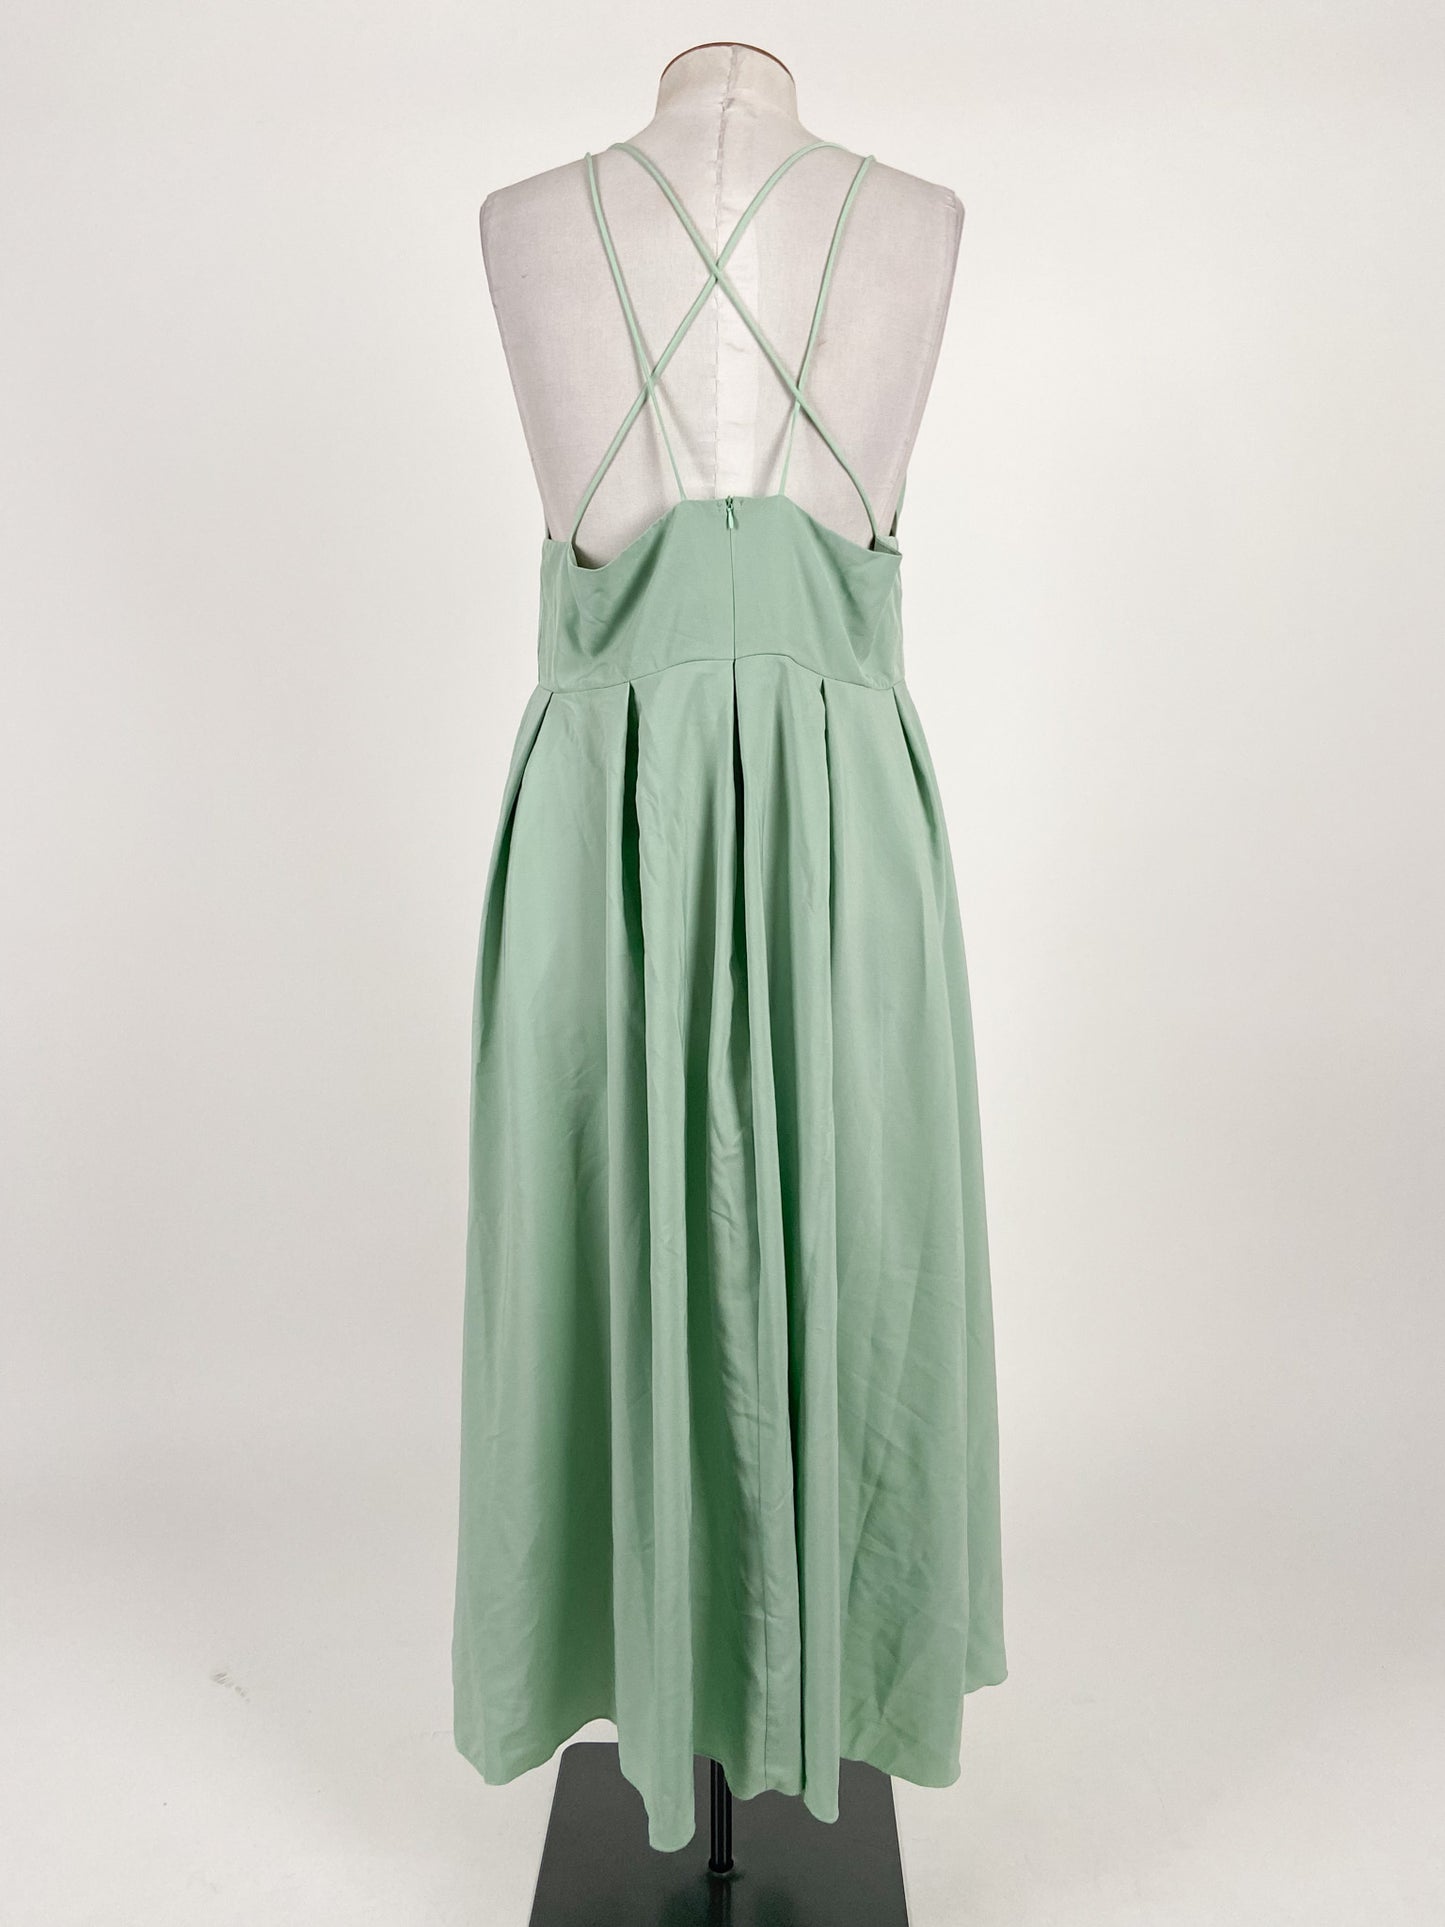 Unknown Brand | Green Formal Dress | Size XL